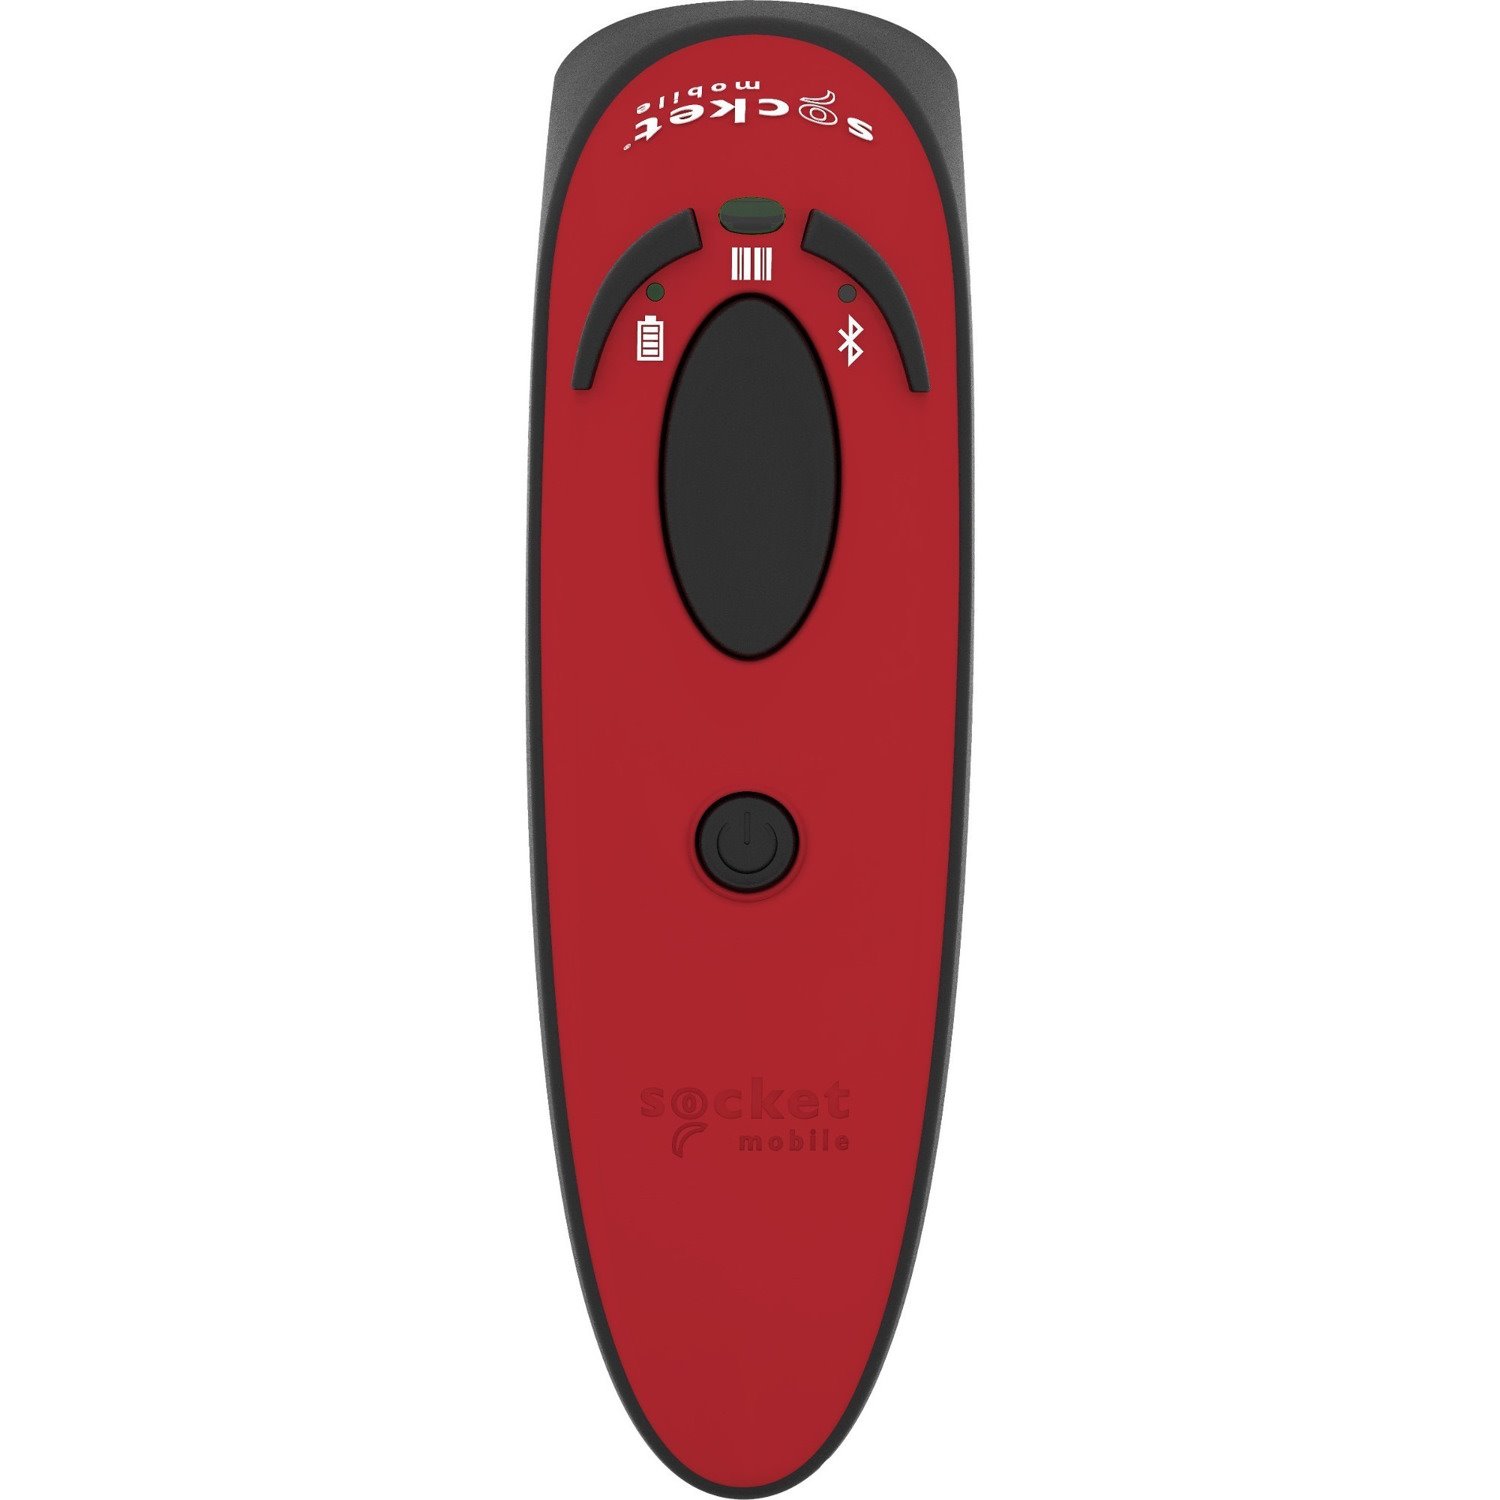 Socket Mobile DuraScan D760 Handheld Barcode Scanner - Wireless Connectivity - Red